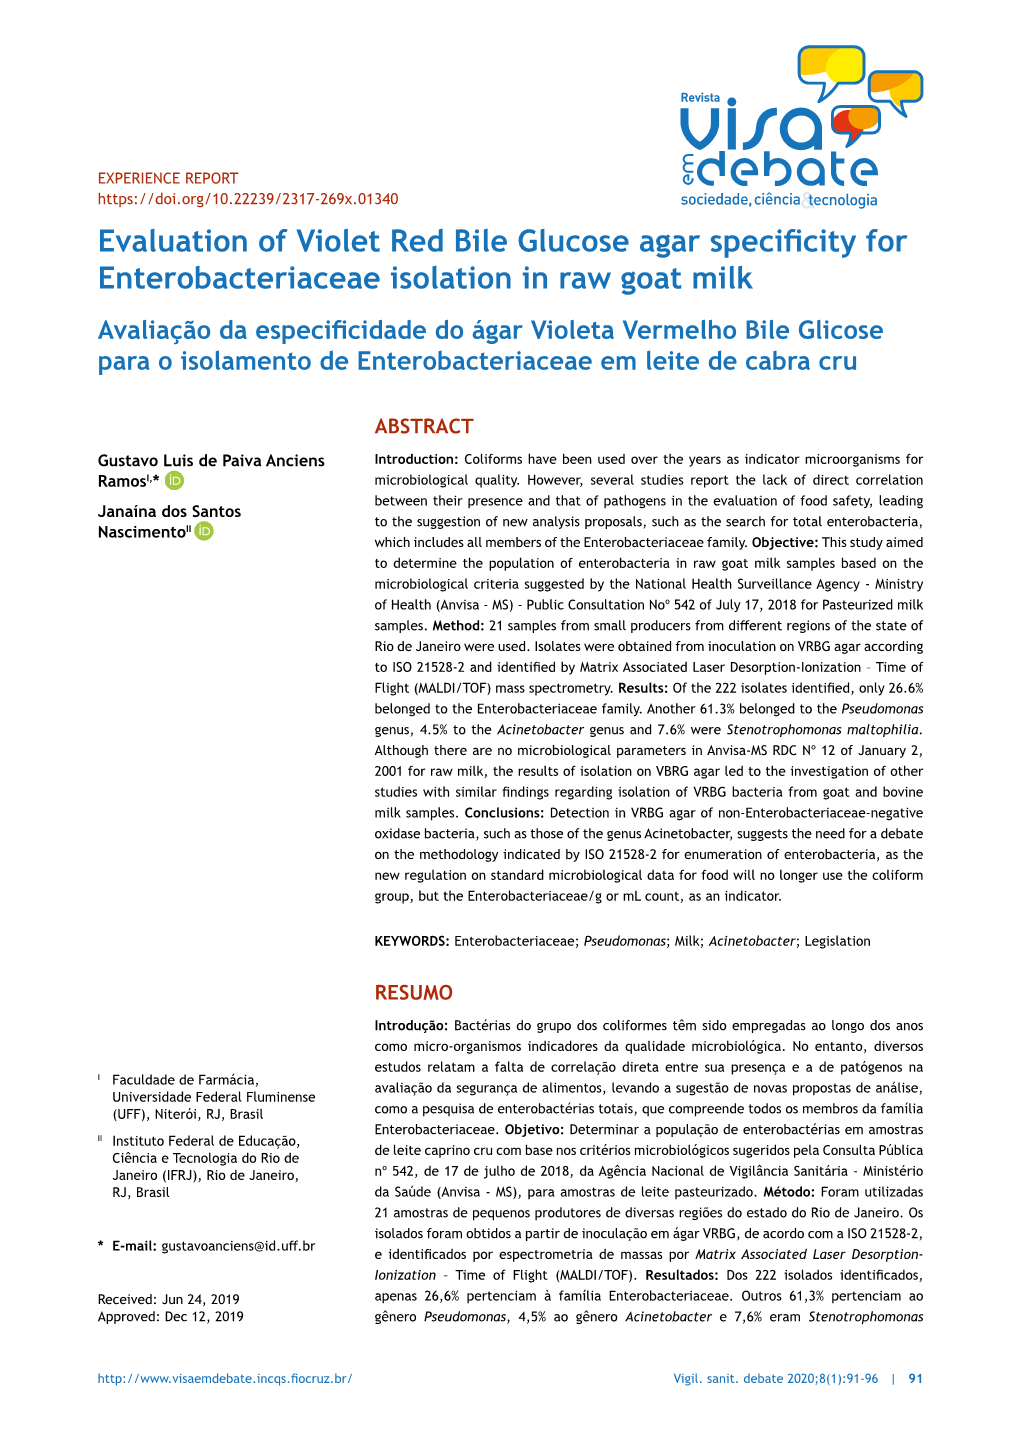 Evaluation of Violet Red Bile Glucose Agar Specificity For